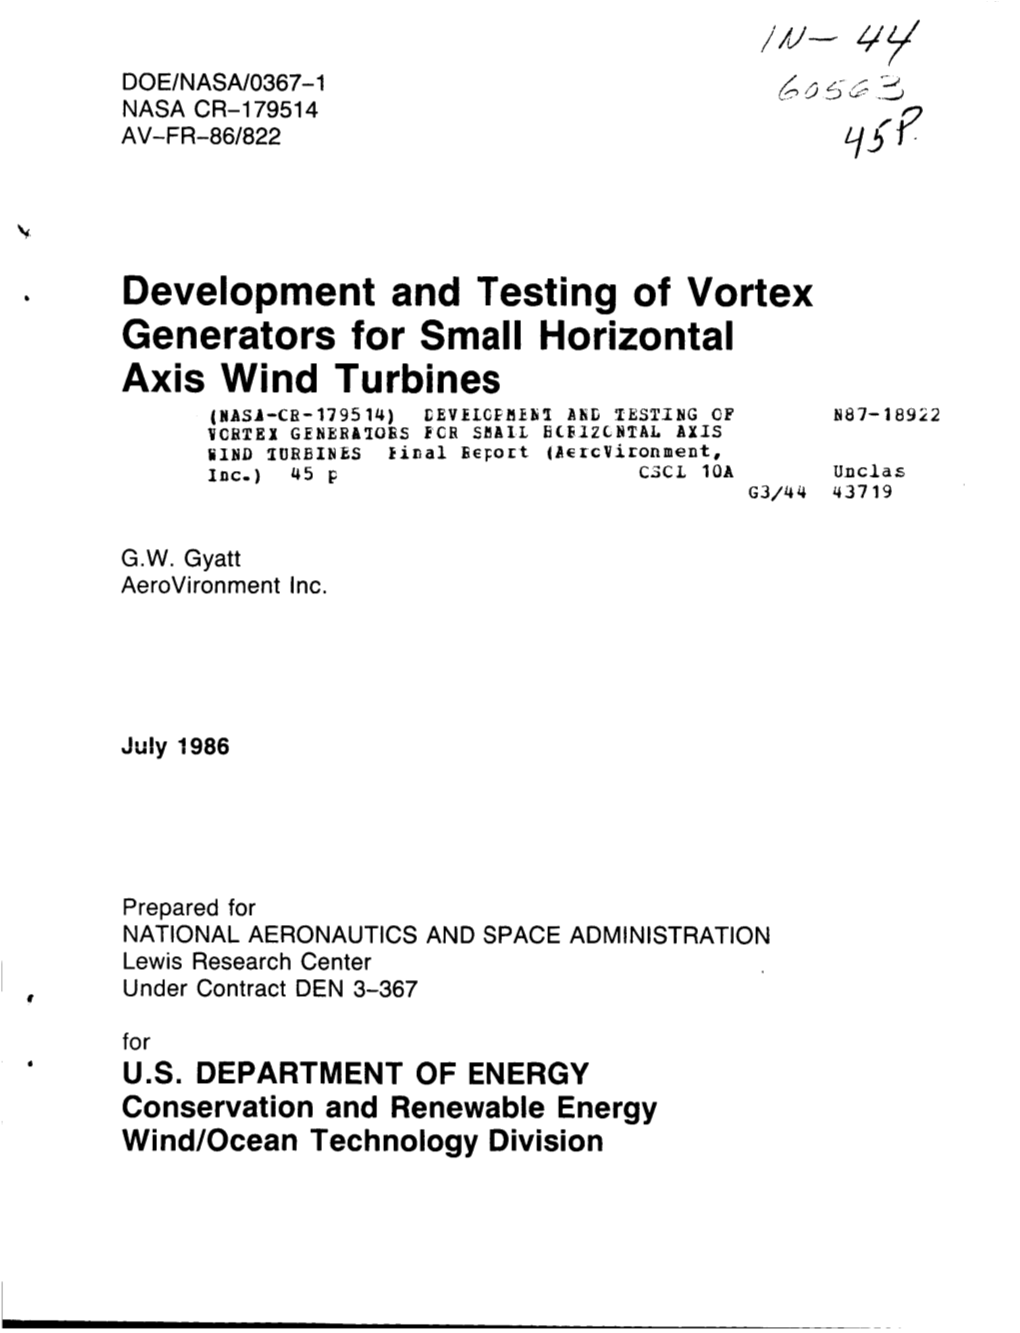 Development and Testing of Vortex Generators for Small Horizontal